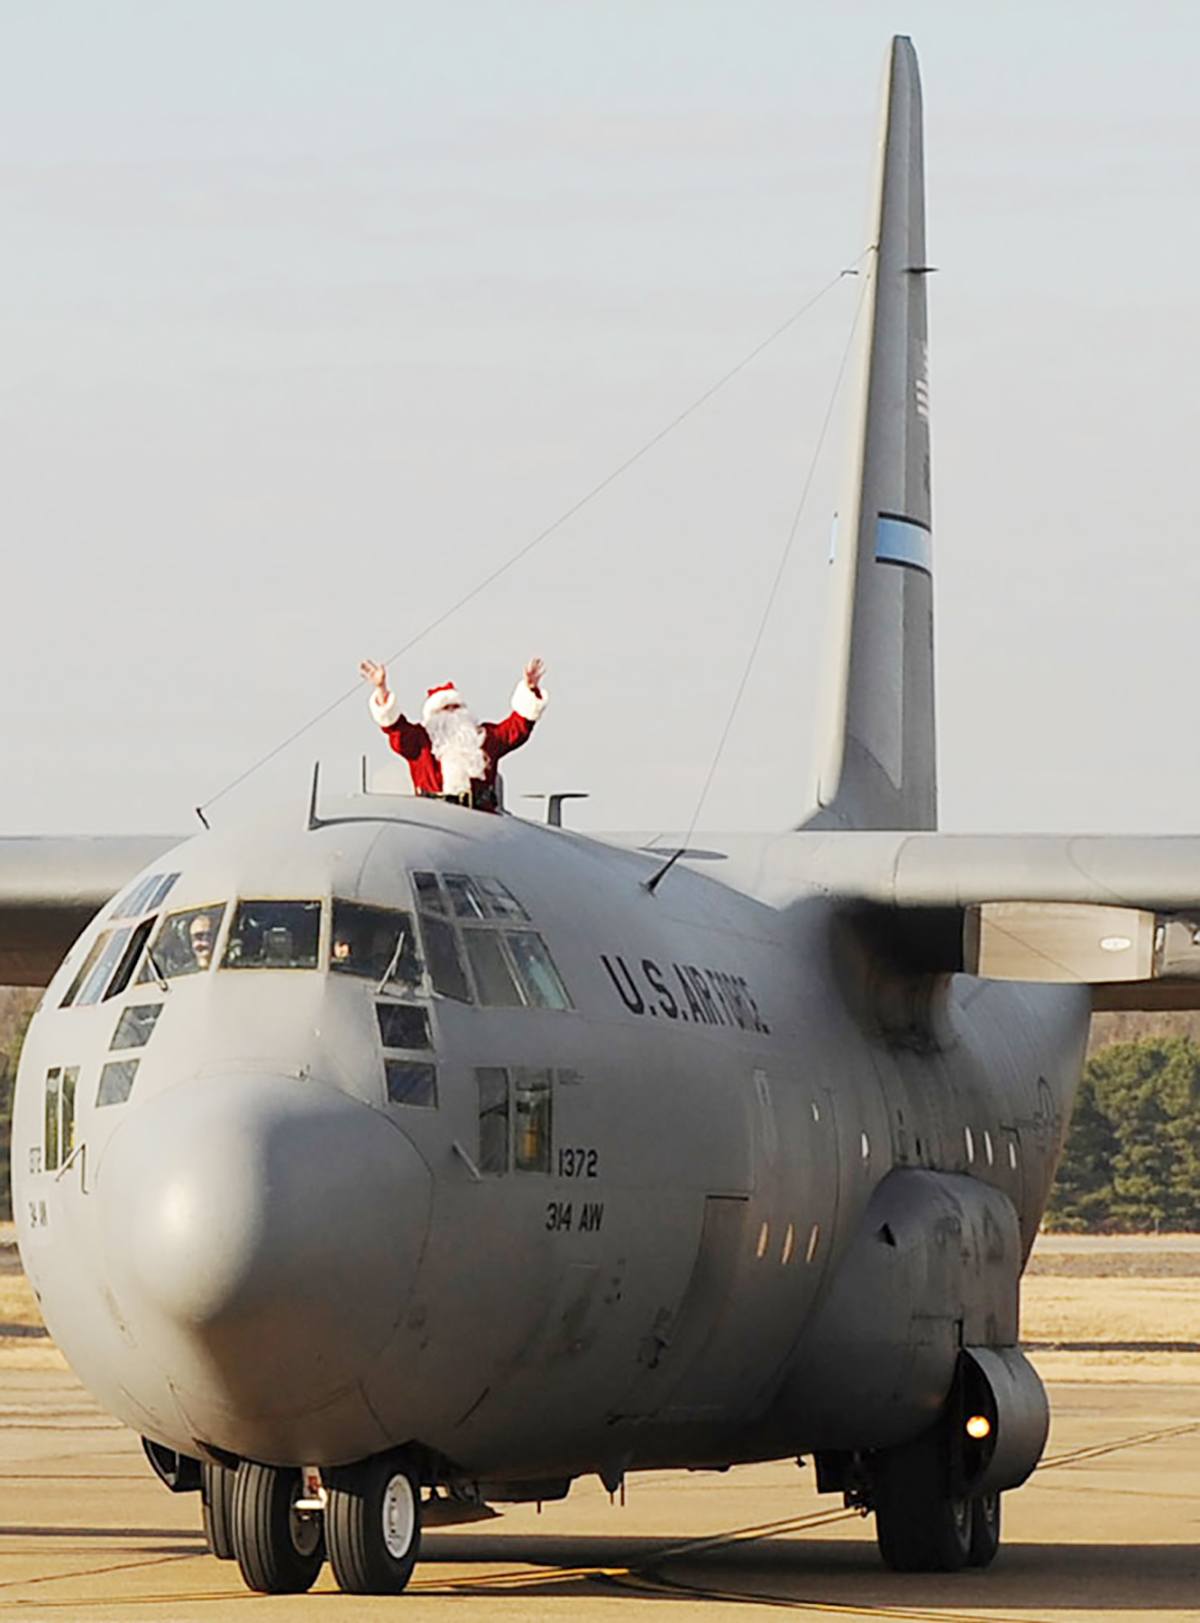 Santa Claus waves from a C-130 Hercules